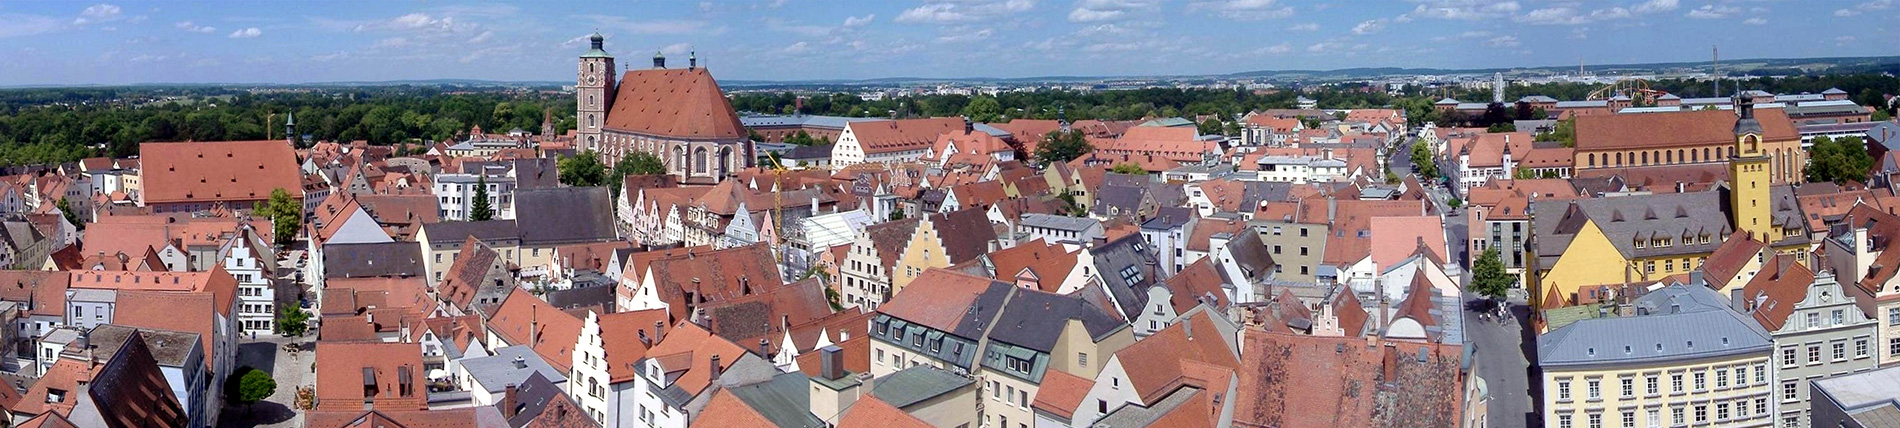 Ingolstadt_Panorama_Nord